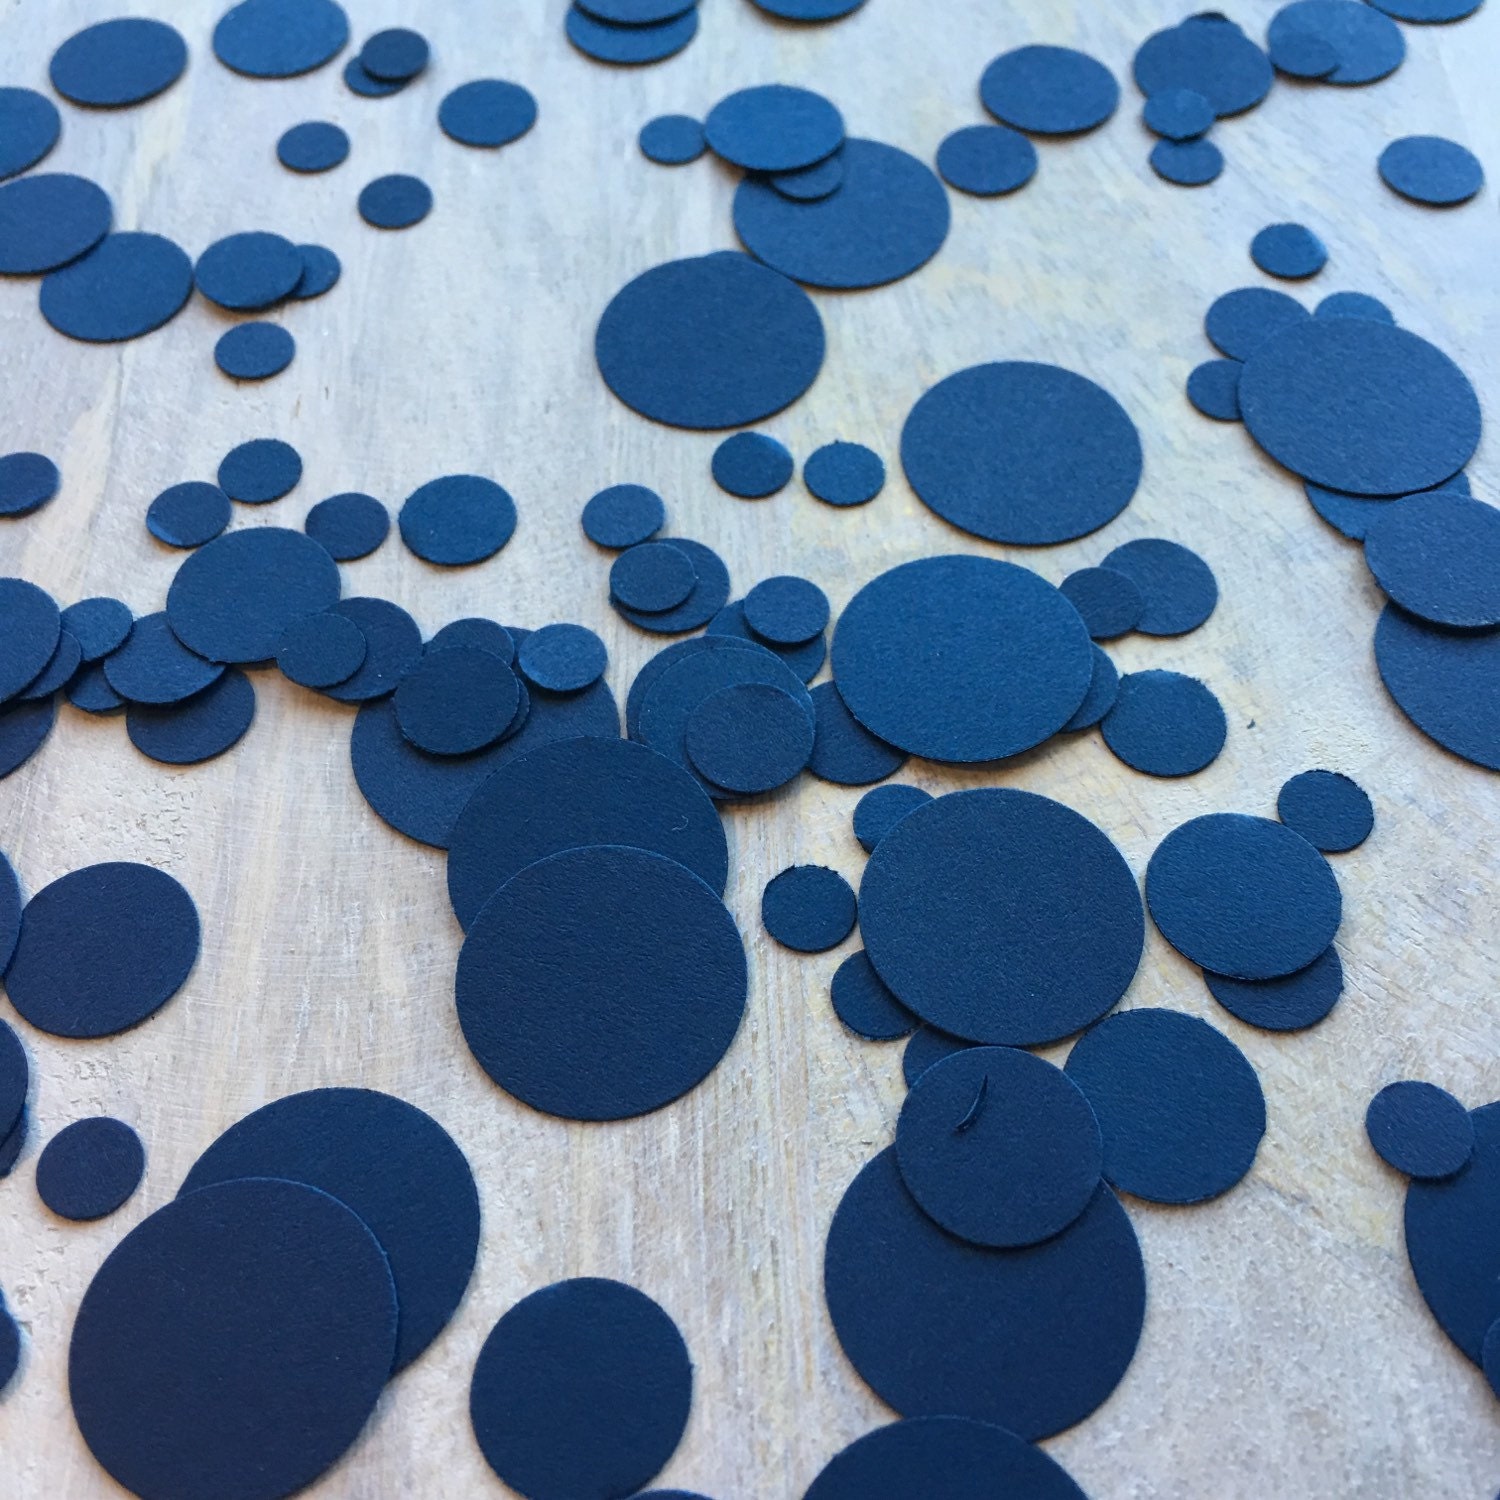 Navy Blue Confetti / Navy Blue Table Confetti